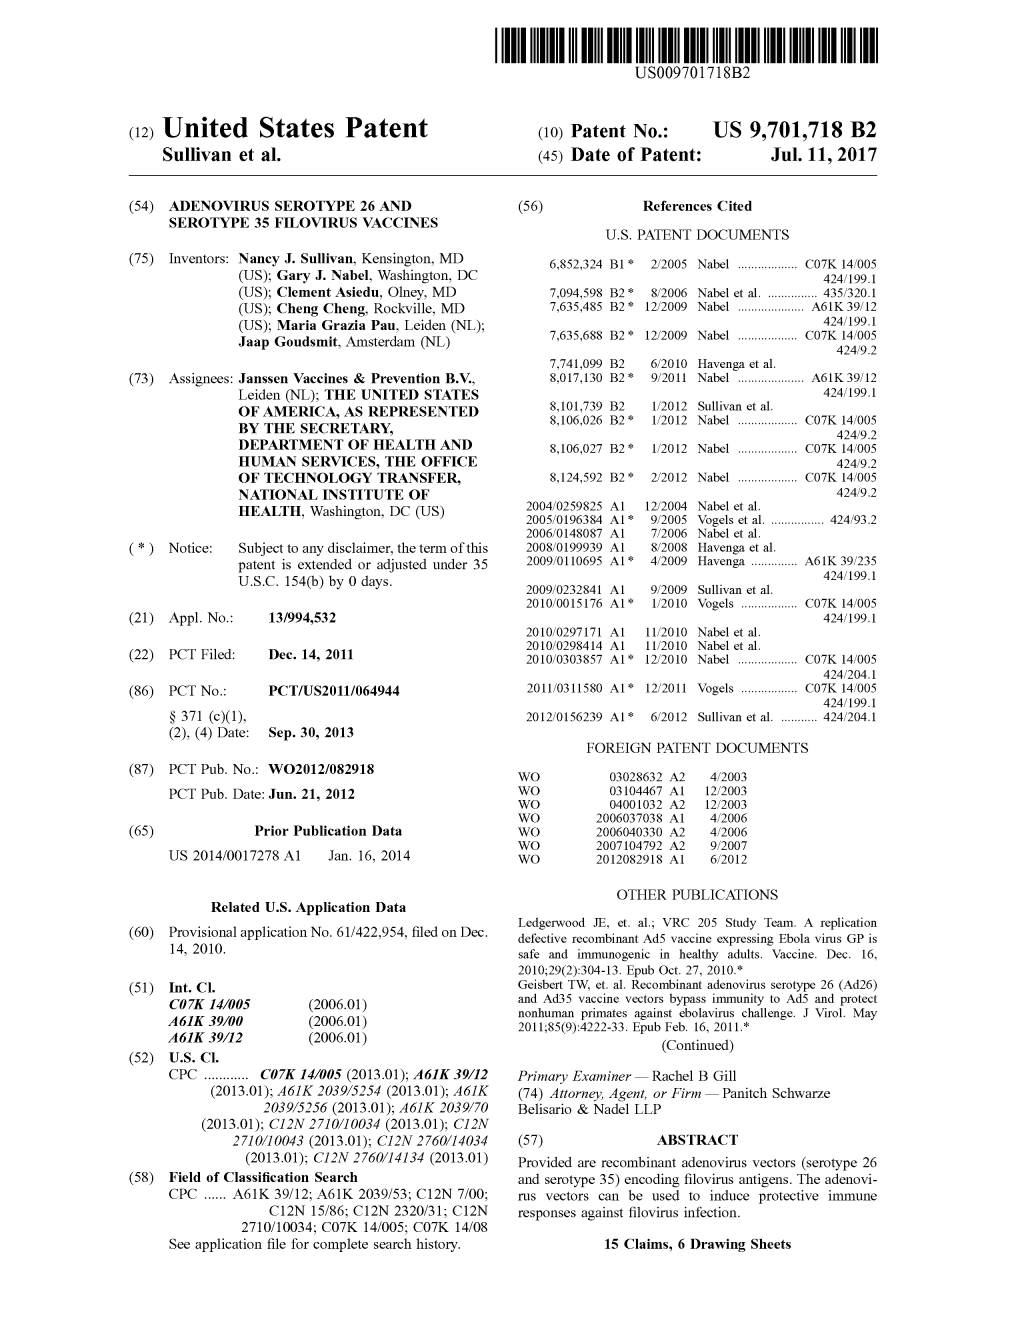 (12) United States Patent (10) Patent No.: US 9,701.718 B2 Sullivan Et Al